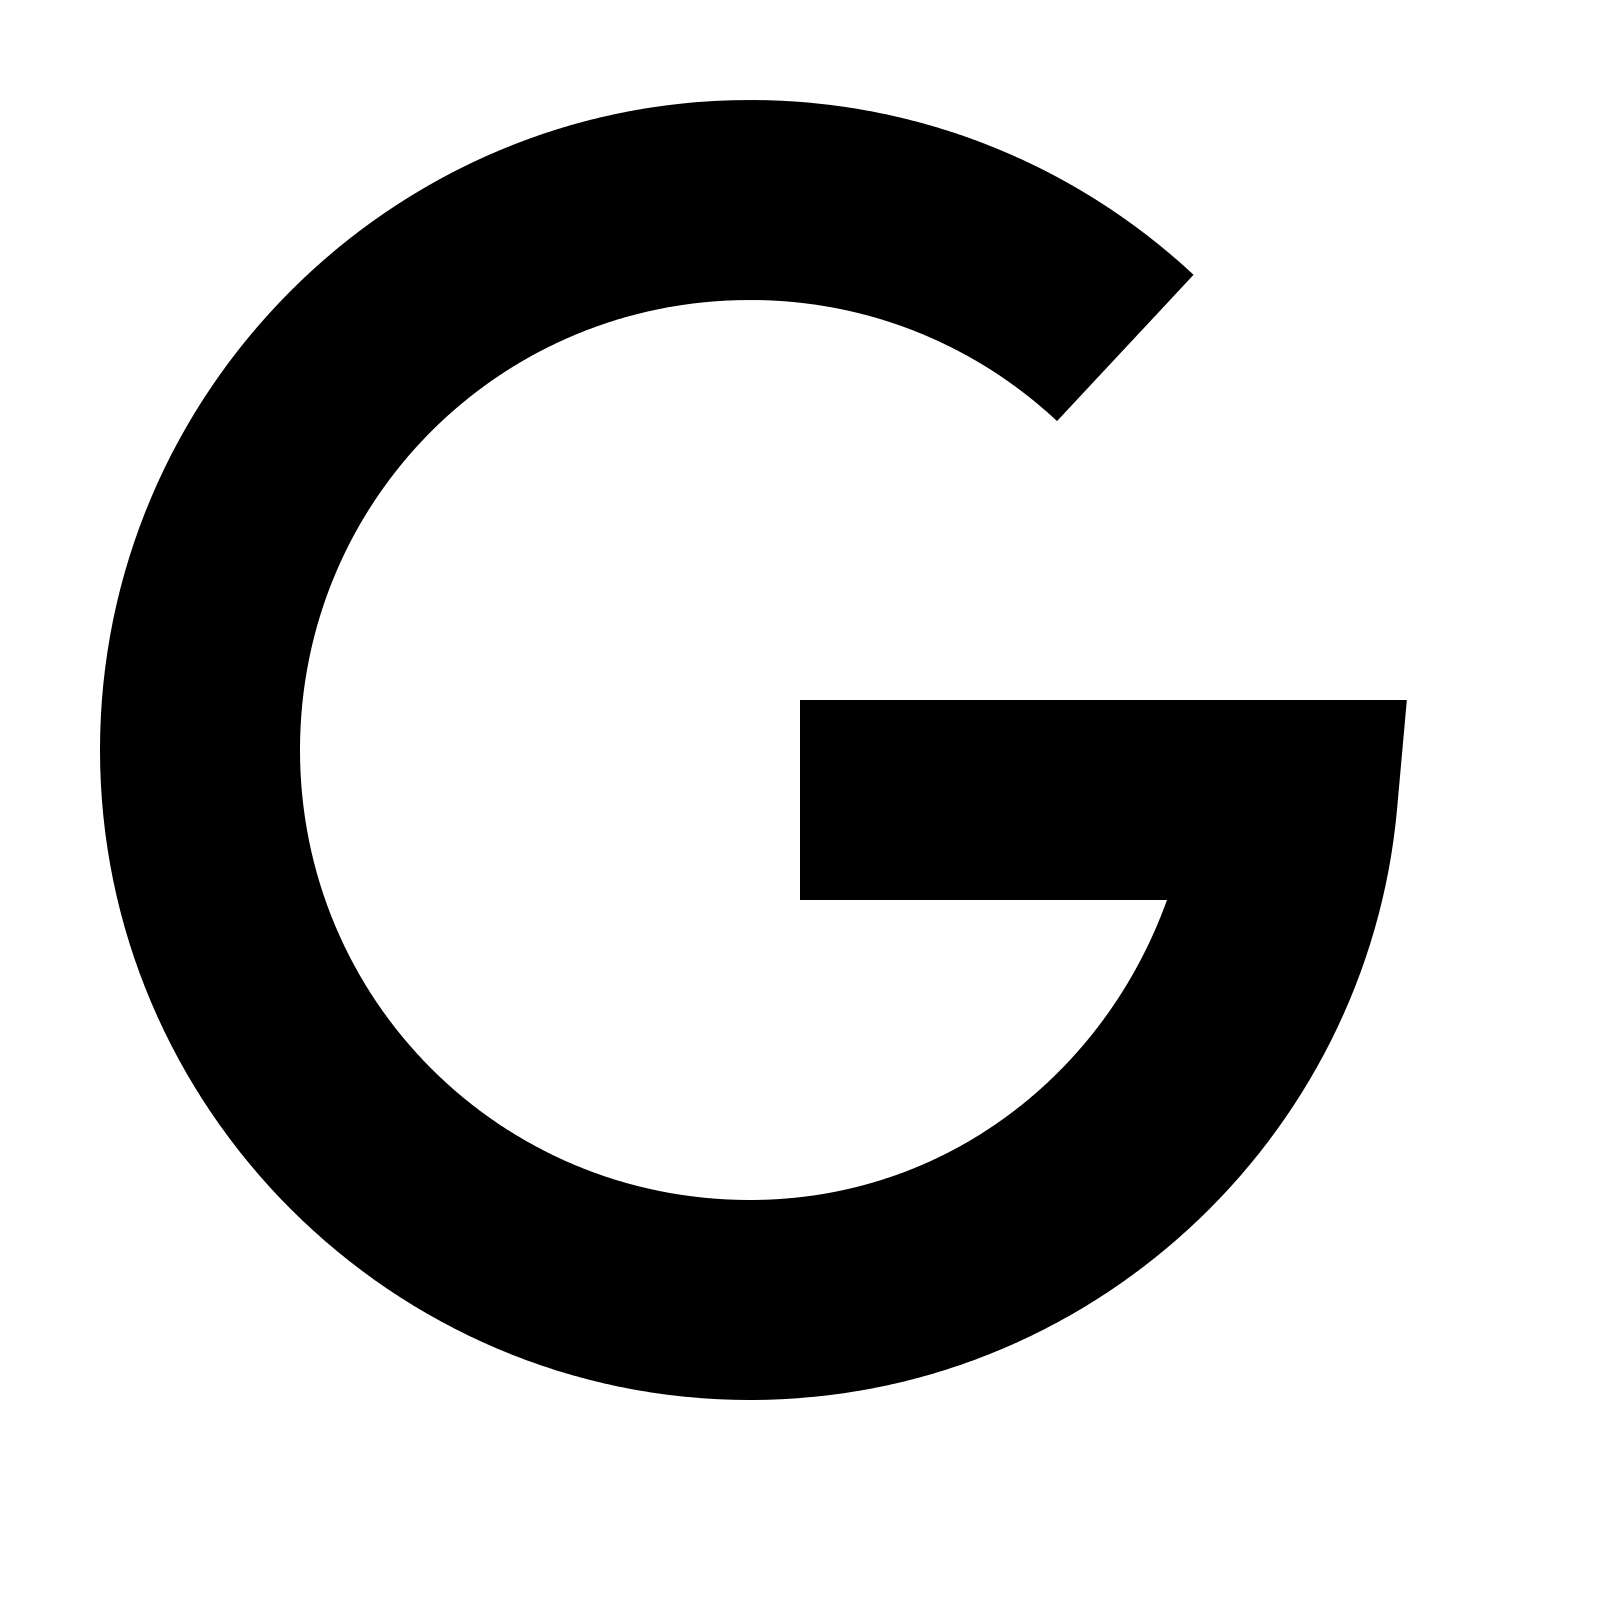 Black and White Google Logo - Black White Google 2017 Logo Png Images